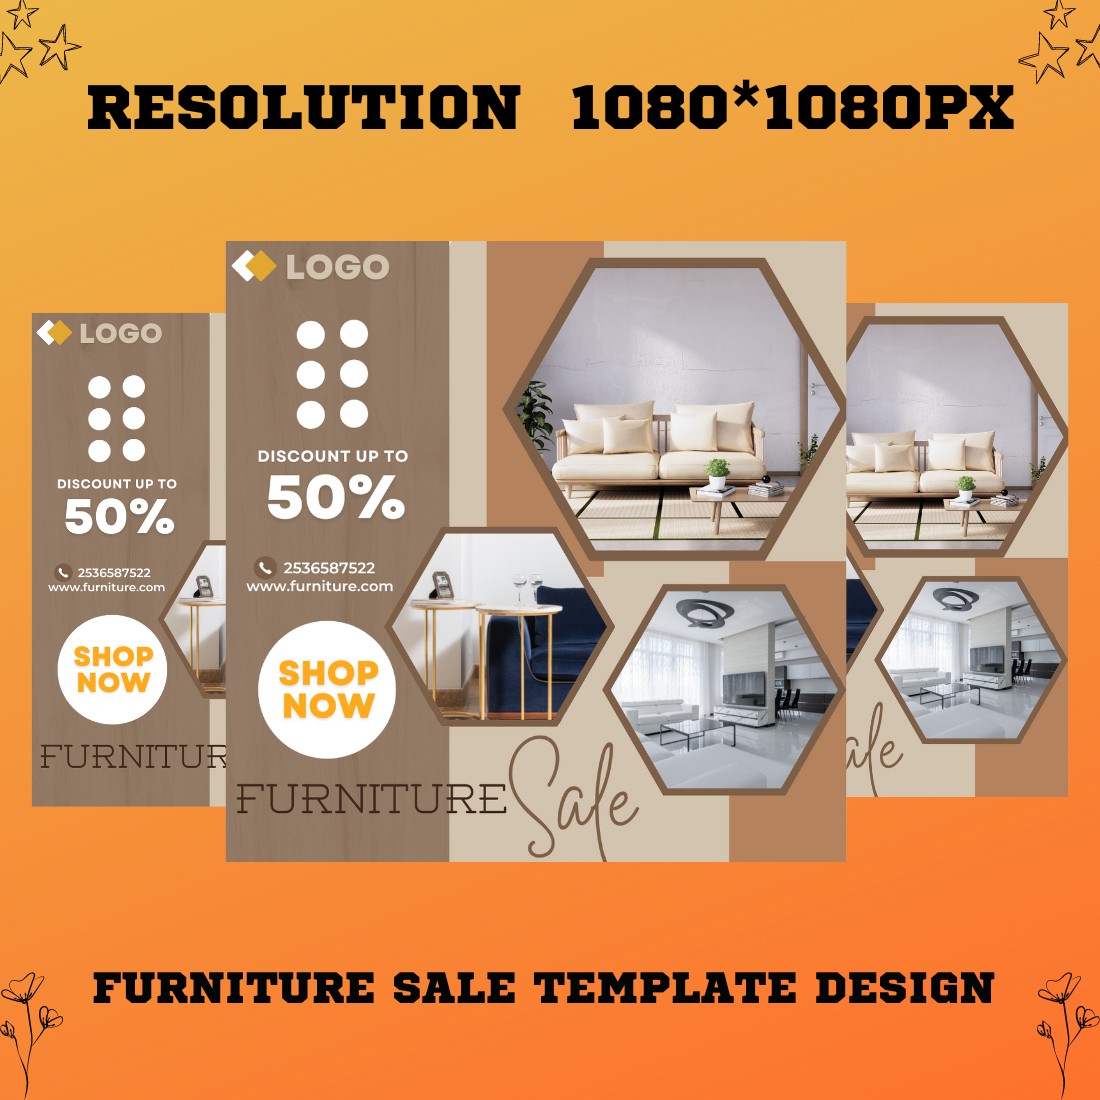 Furniture Sale Template Design cover image.